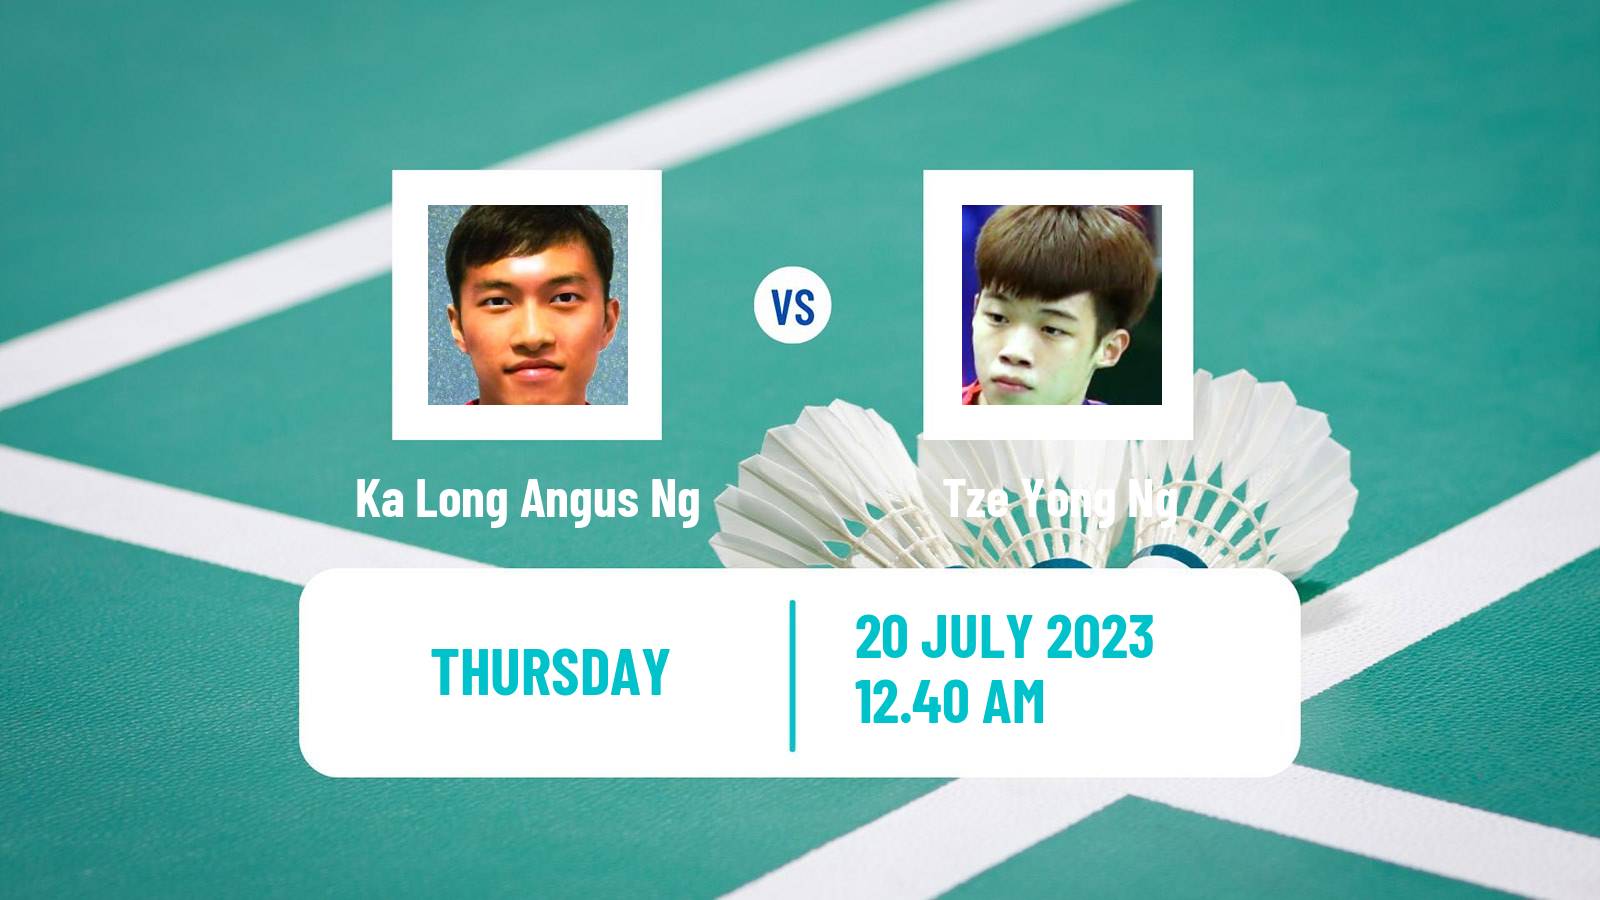 Badminton BWF World Tour Korea Open Men Ka Long Angus Ng - Tze Yong Ng